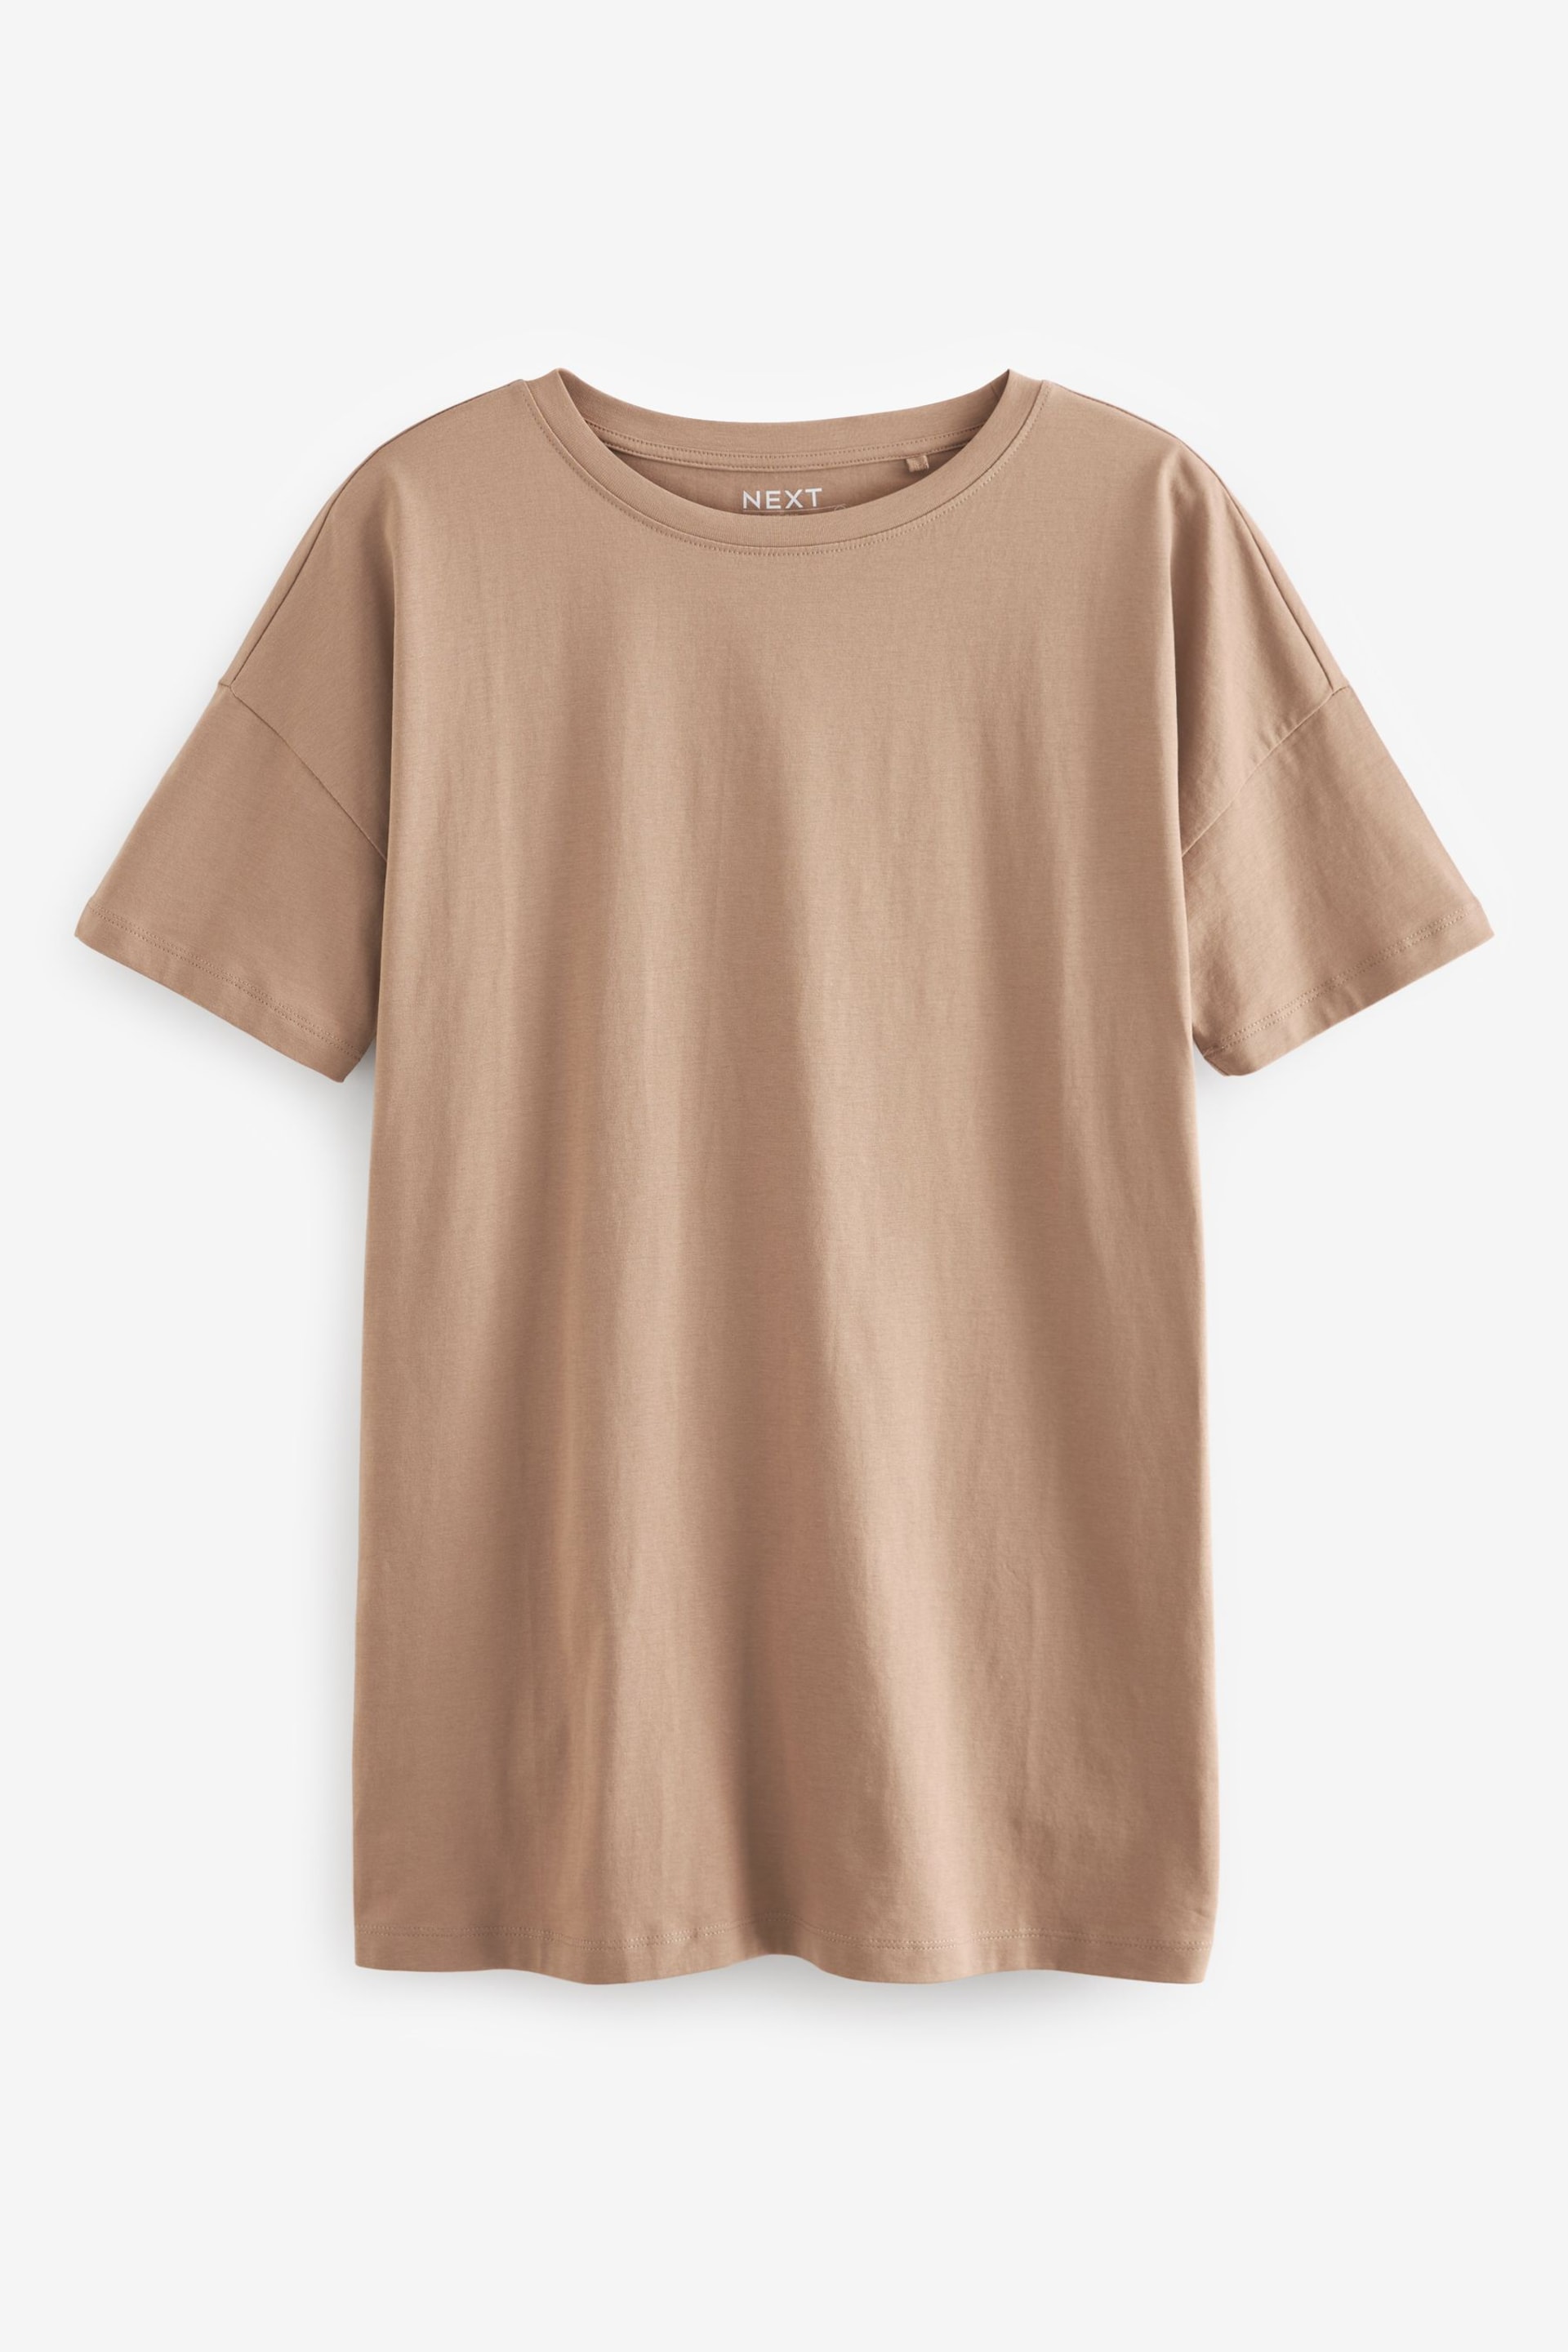 Neutral Oversized T-Shirt - Image 5 of 6